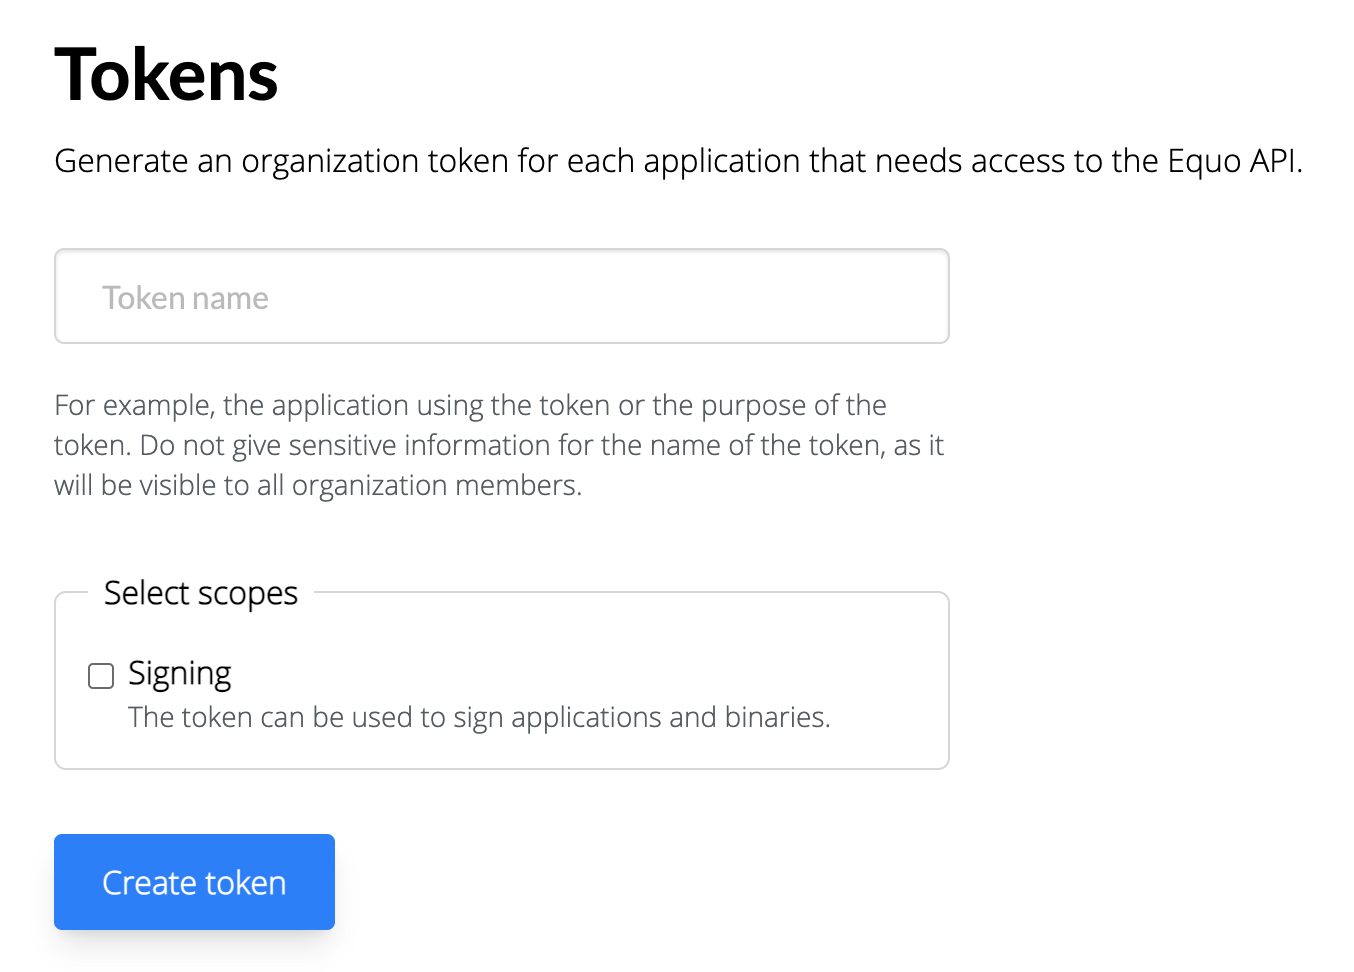 UI for creating an organization token.